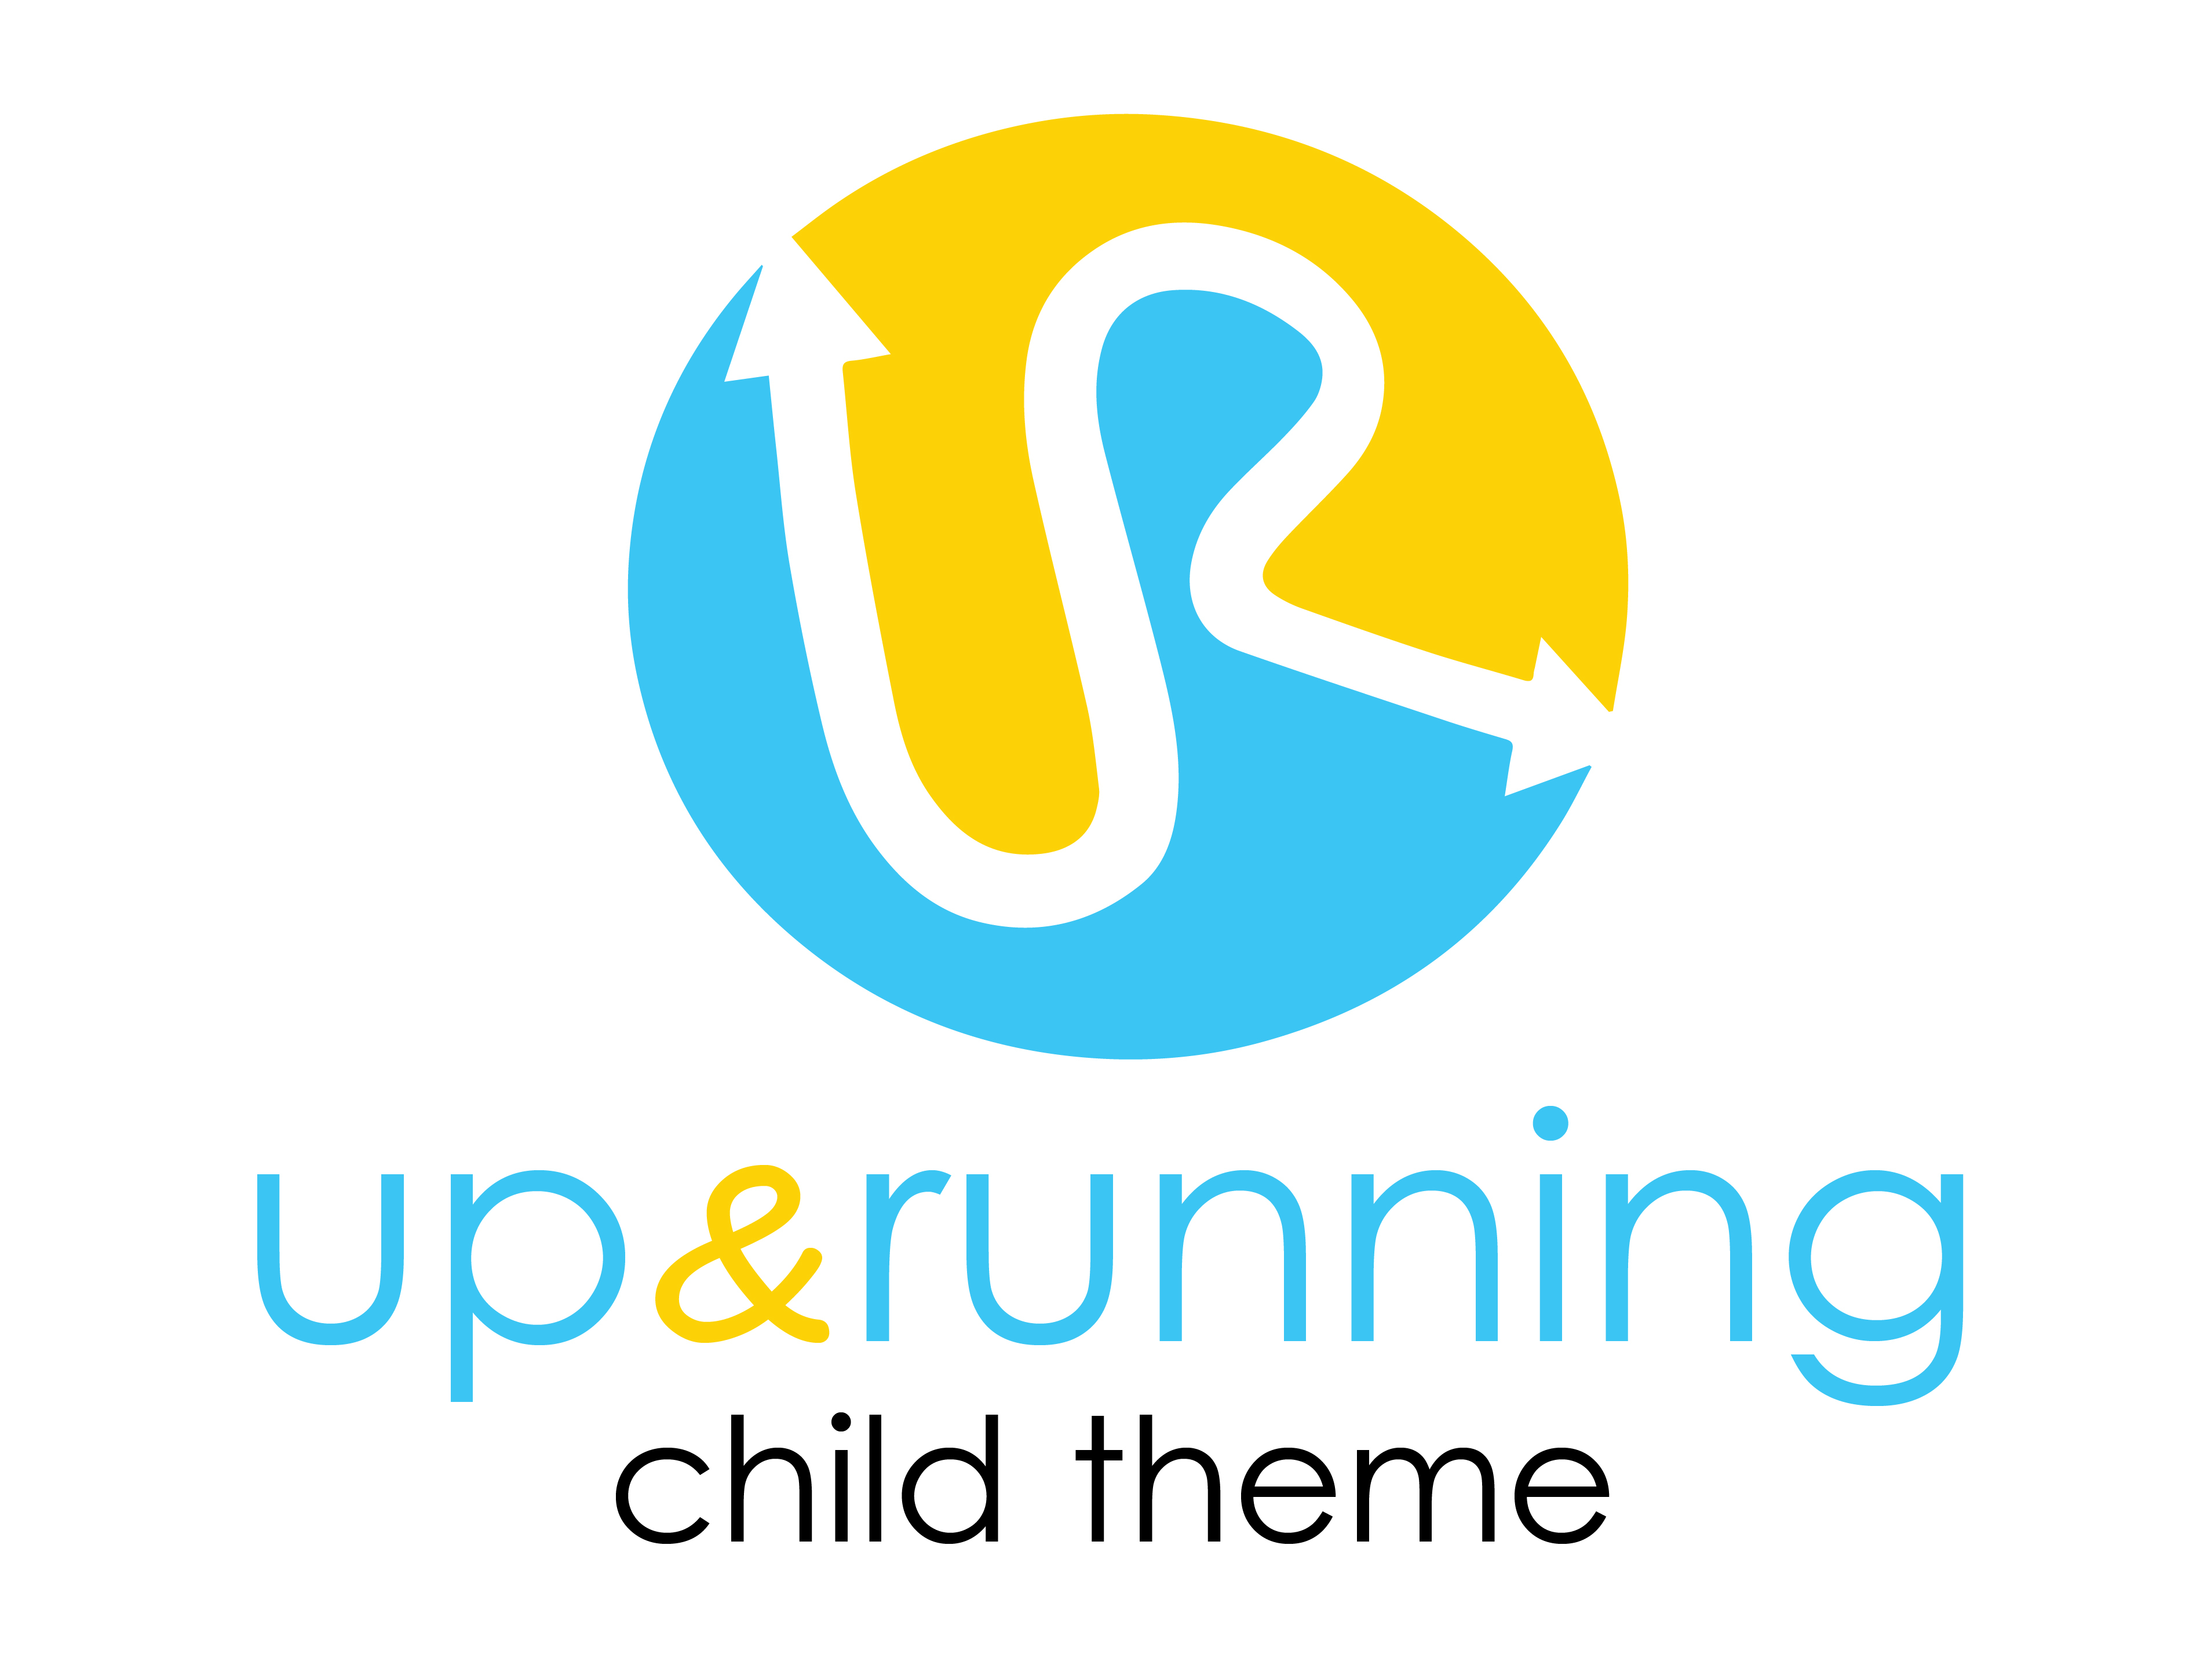 ur-child-theme-best-wordpress-theme-driwu-o.jpg